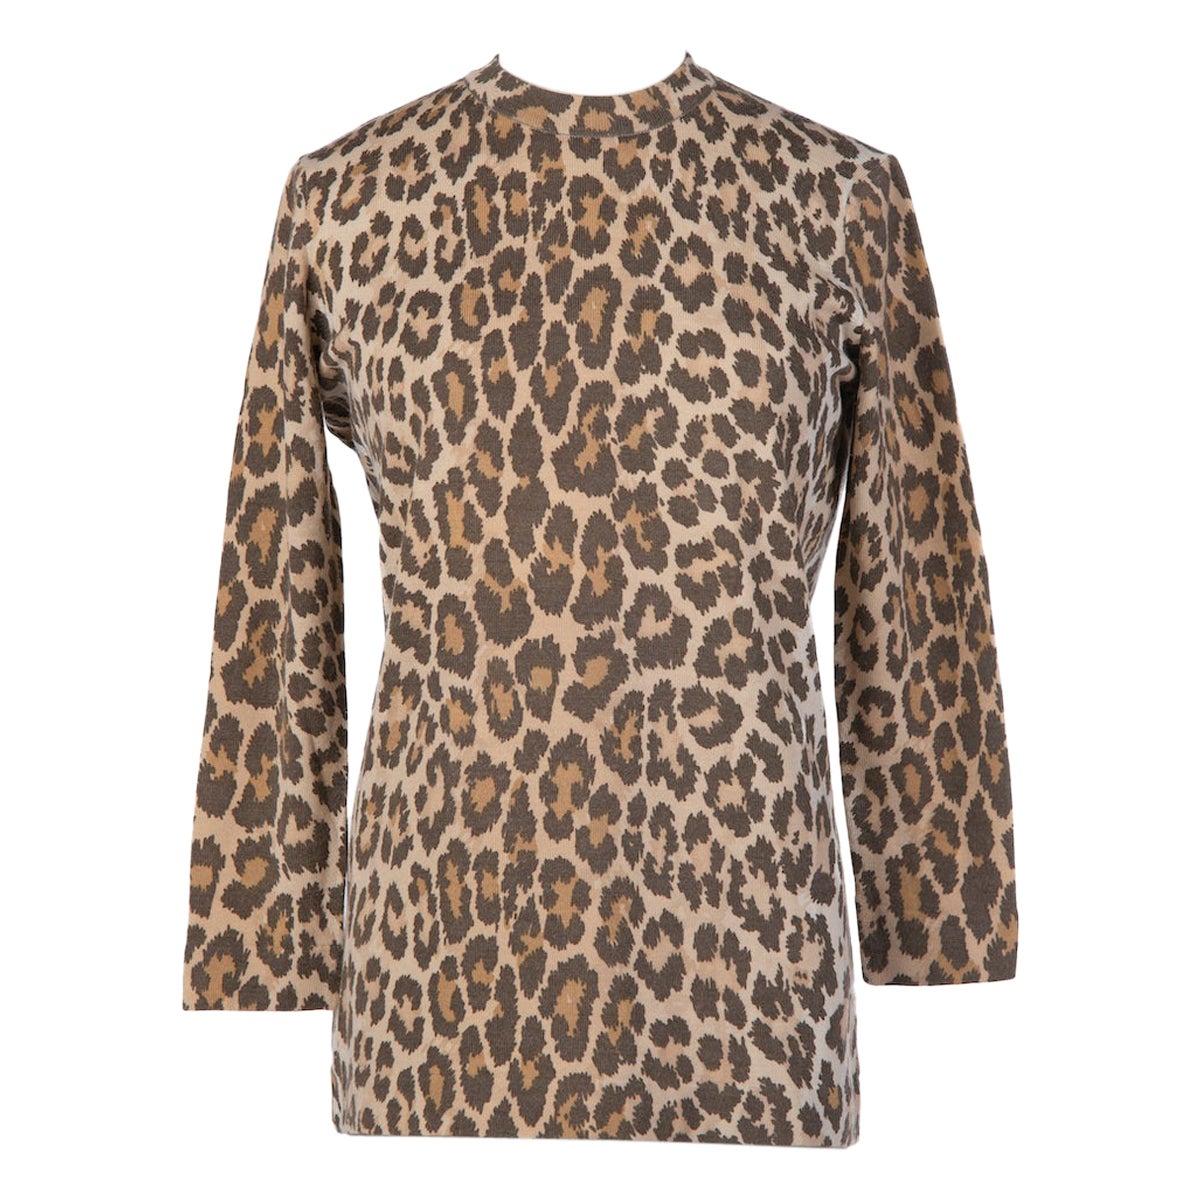 1970s LEONARD Fashion Paris Brown Animal Leopard Print Wool Blend Knit Top For Sale